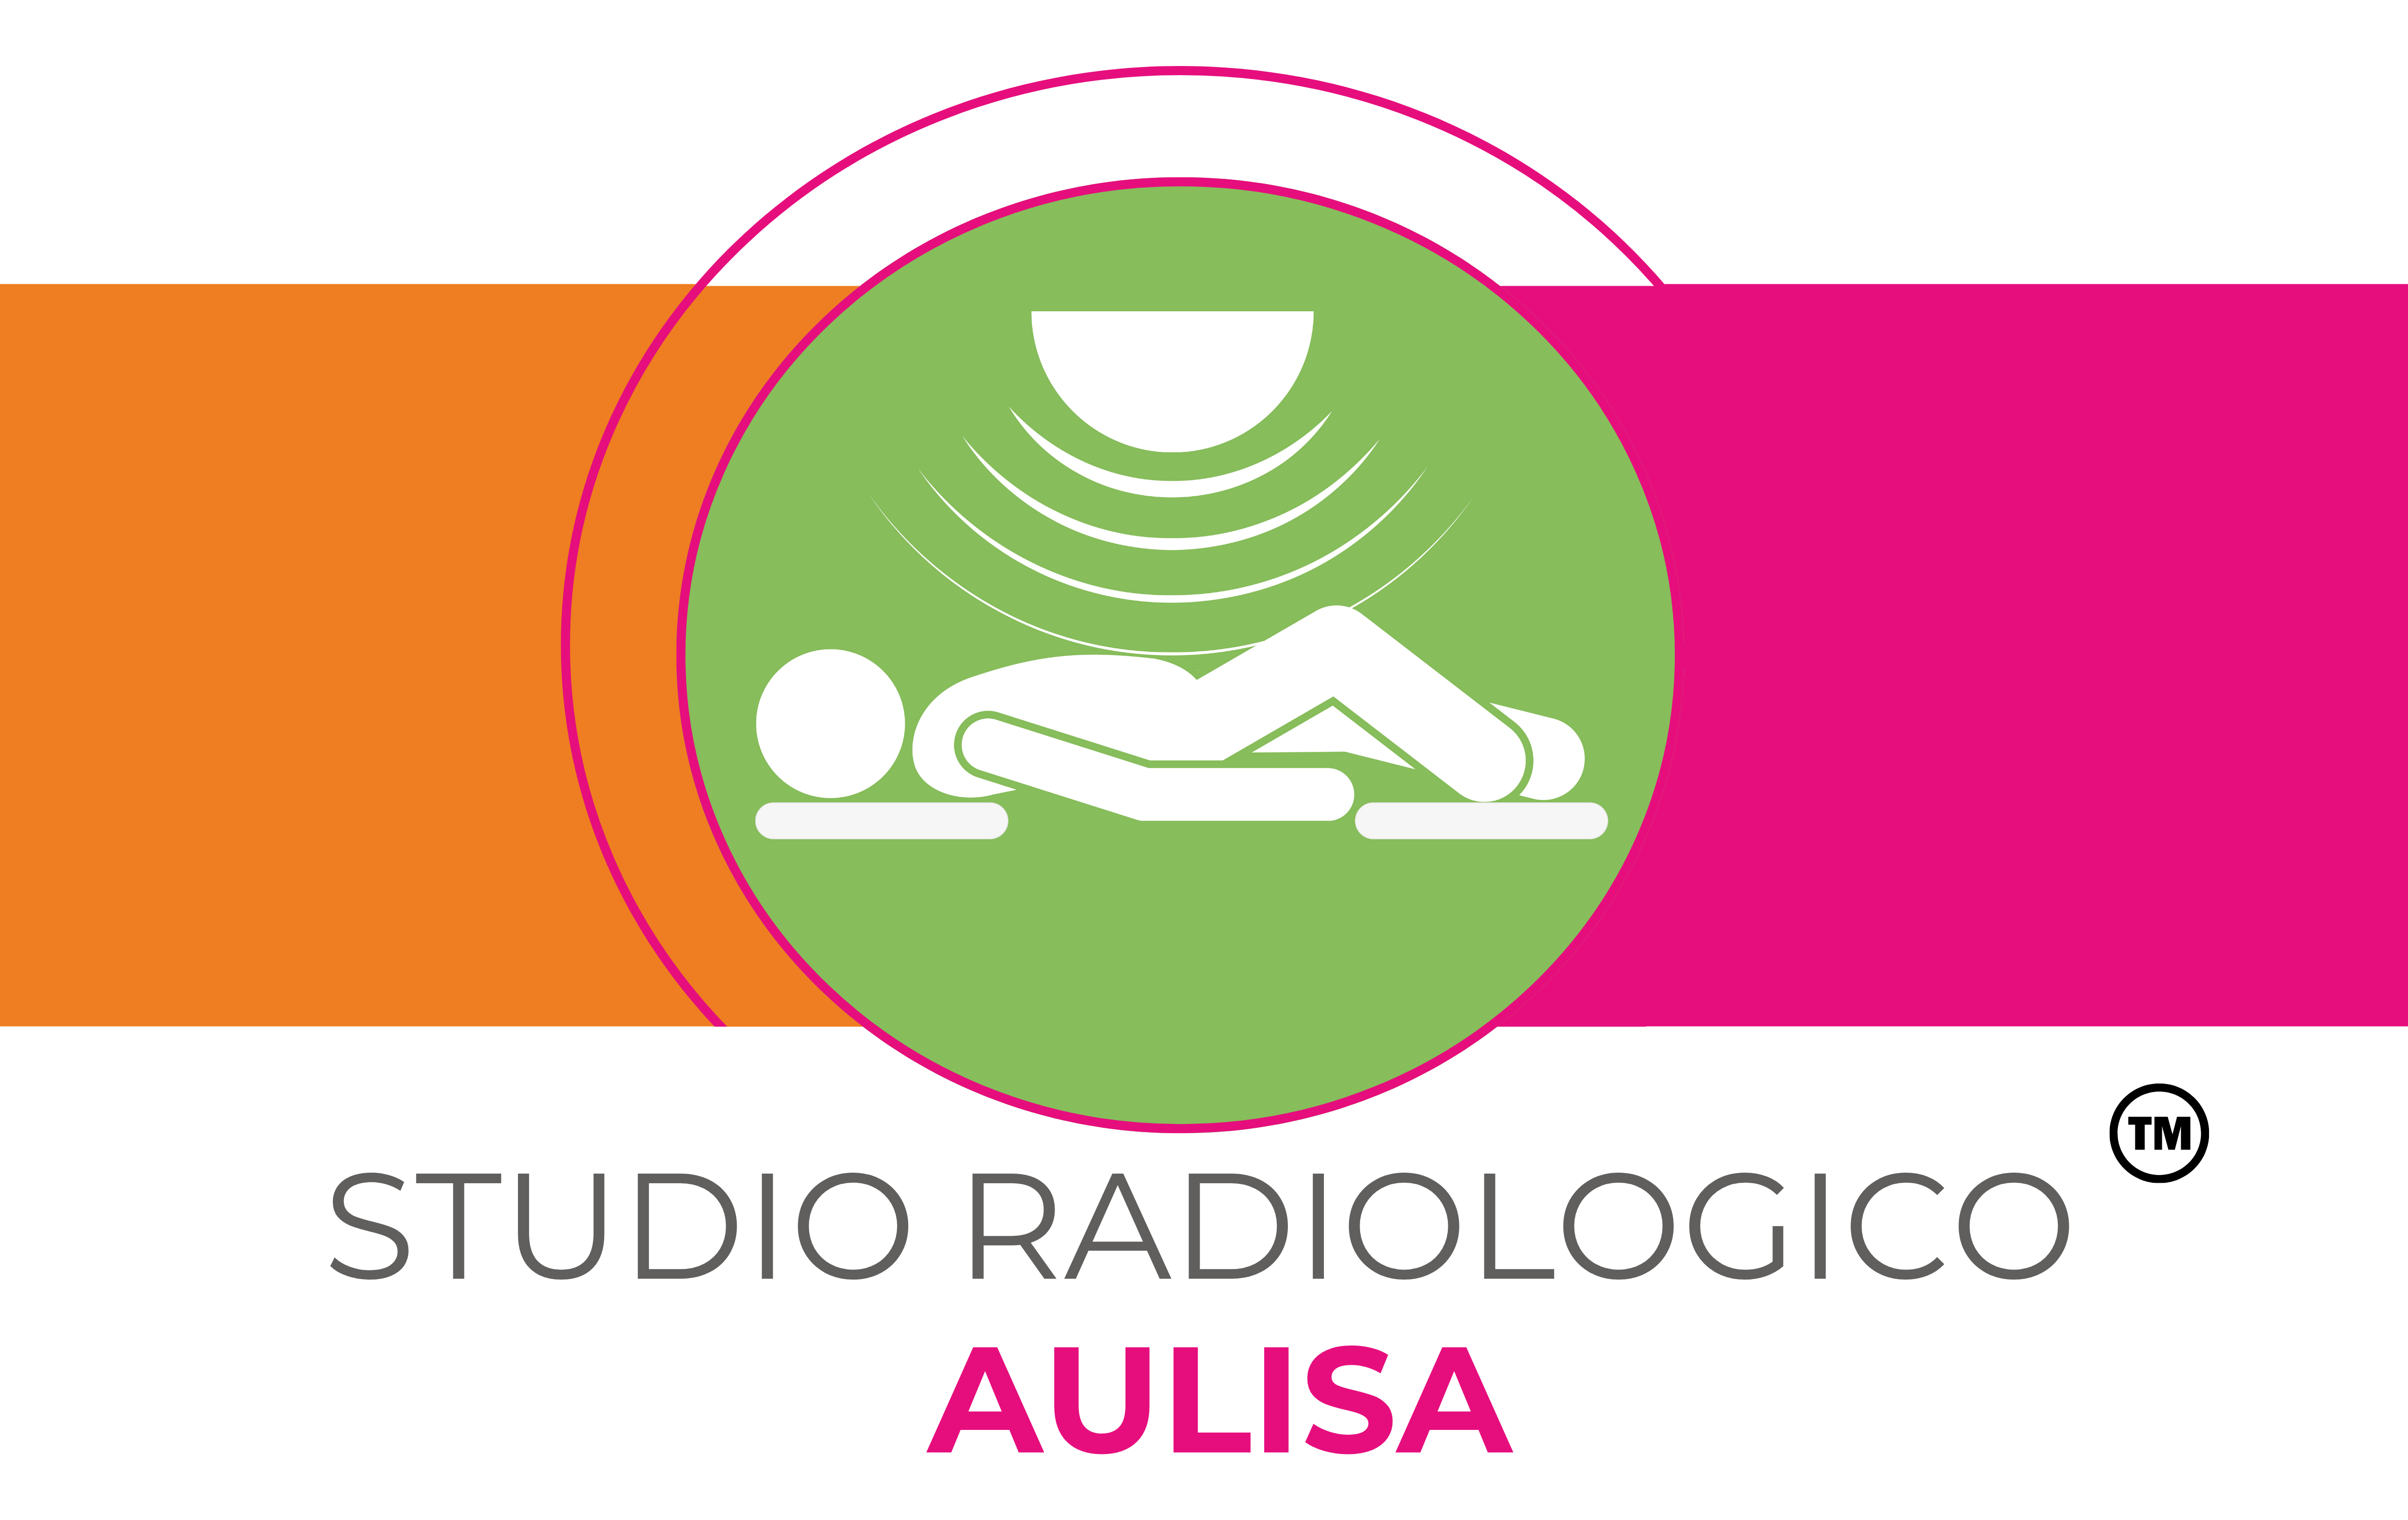 Studio Radiologico Aulisa